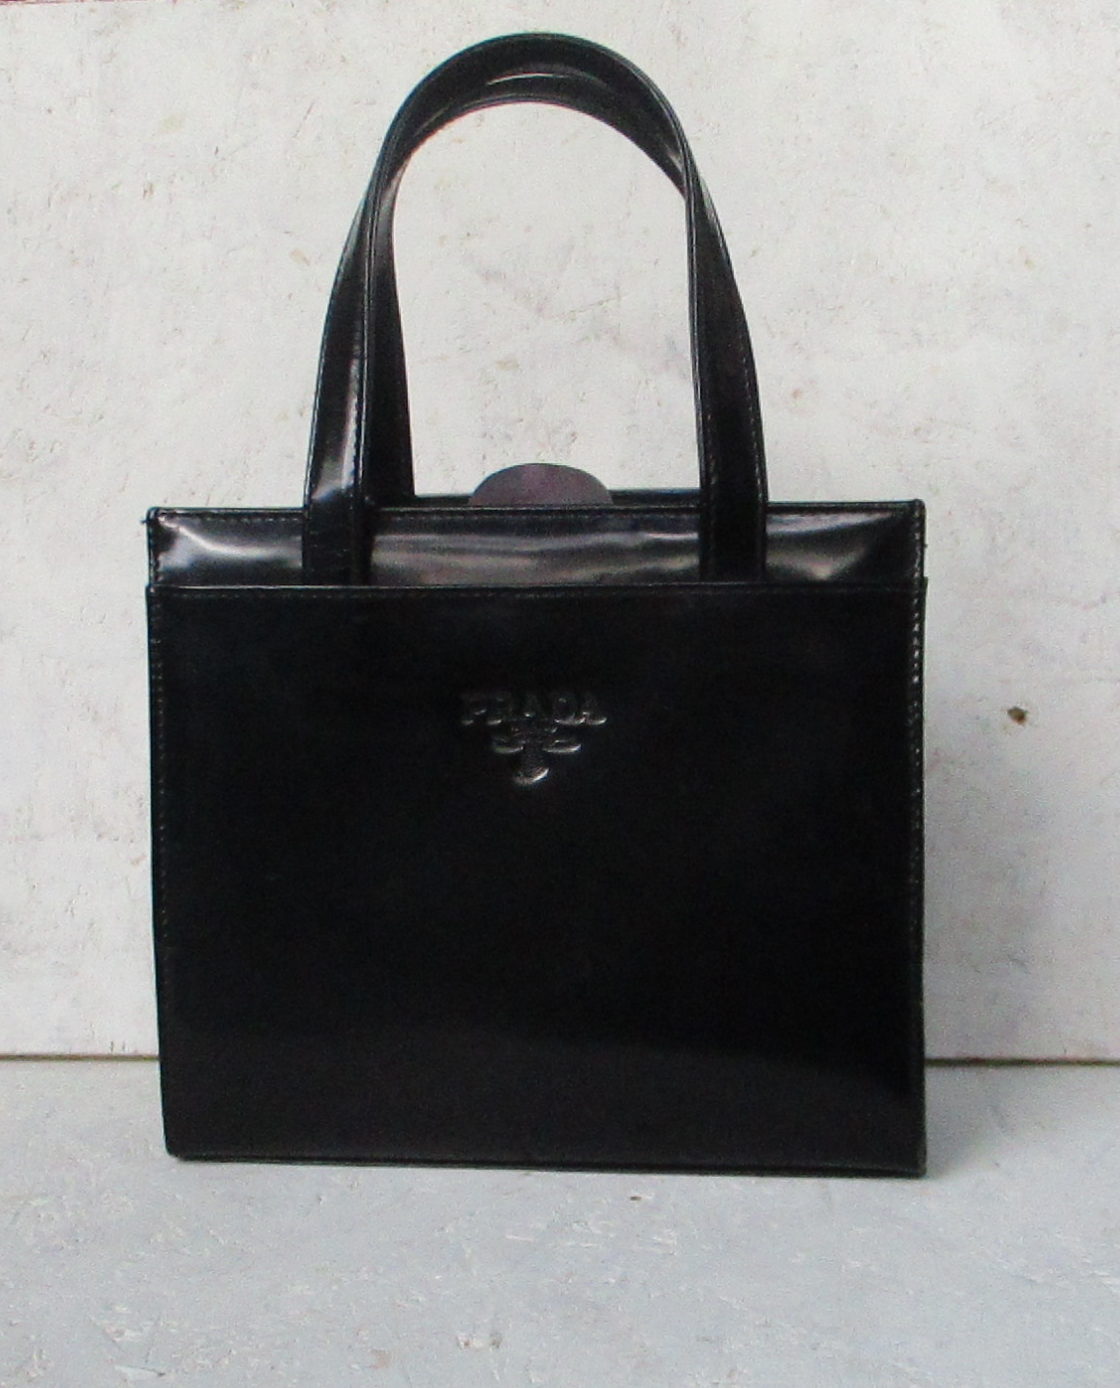 Handbag in black vernice metal leather